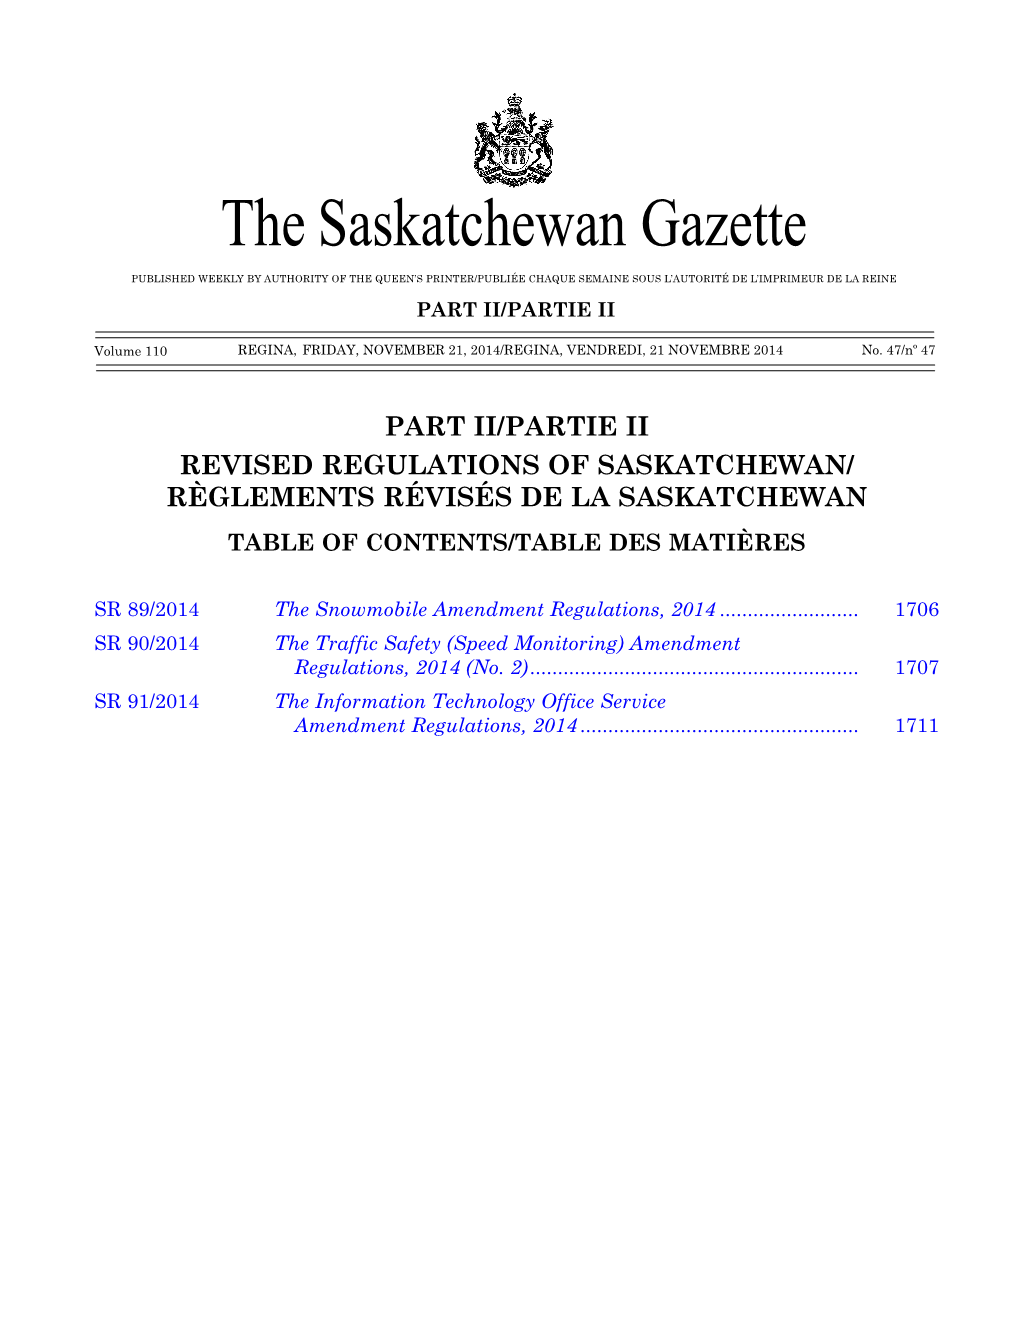 THE SASKATCHEWAN GAZETTE, NOVEMBER 21, 2014 1703 the Saskatchewan Gazette